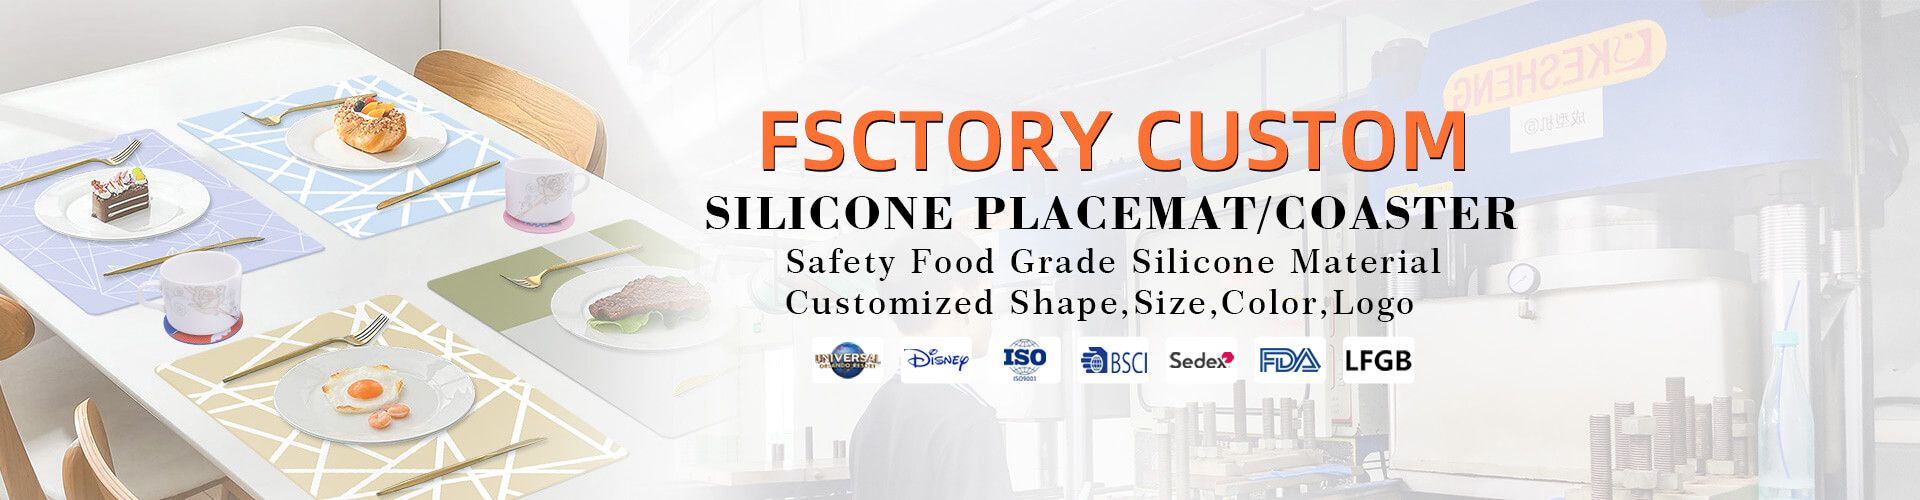 silicone houseware factory custom